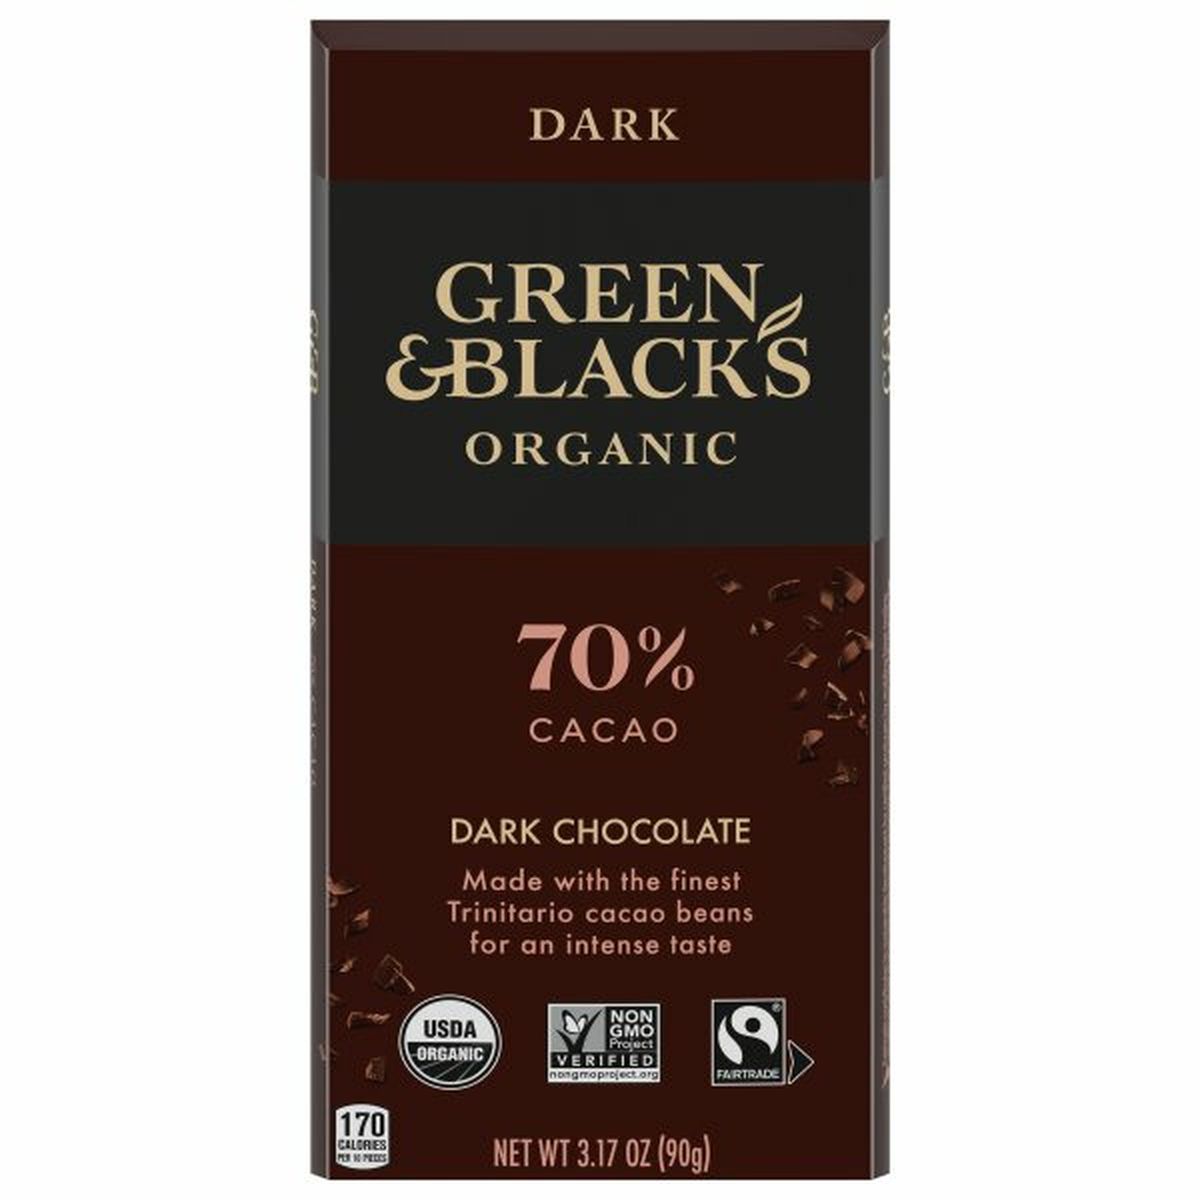 Calories in Green & Black's Dark Chocolate, Organic, 70% Cacao